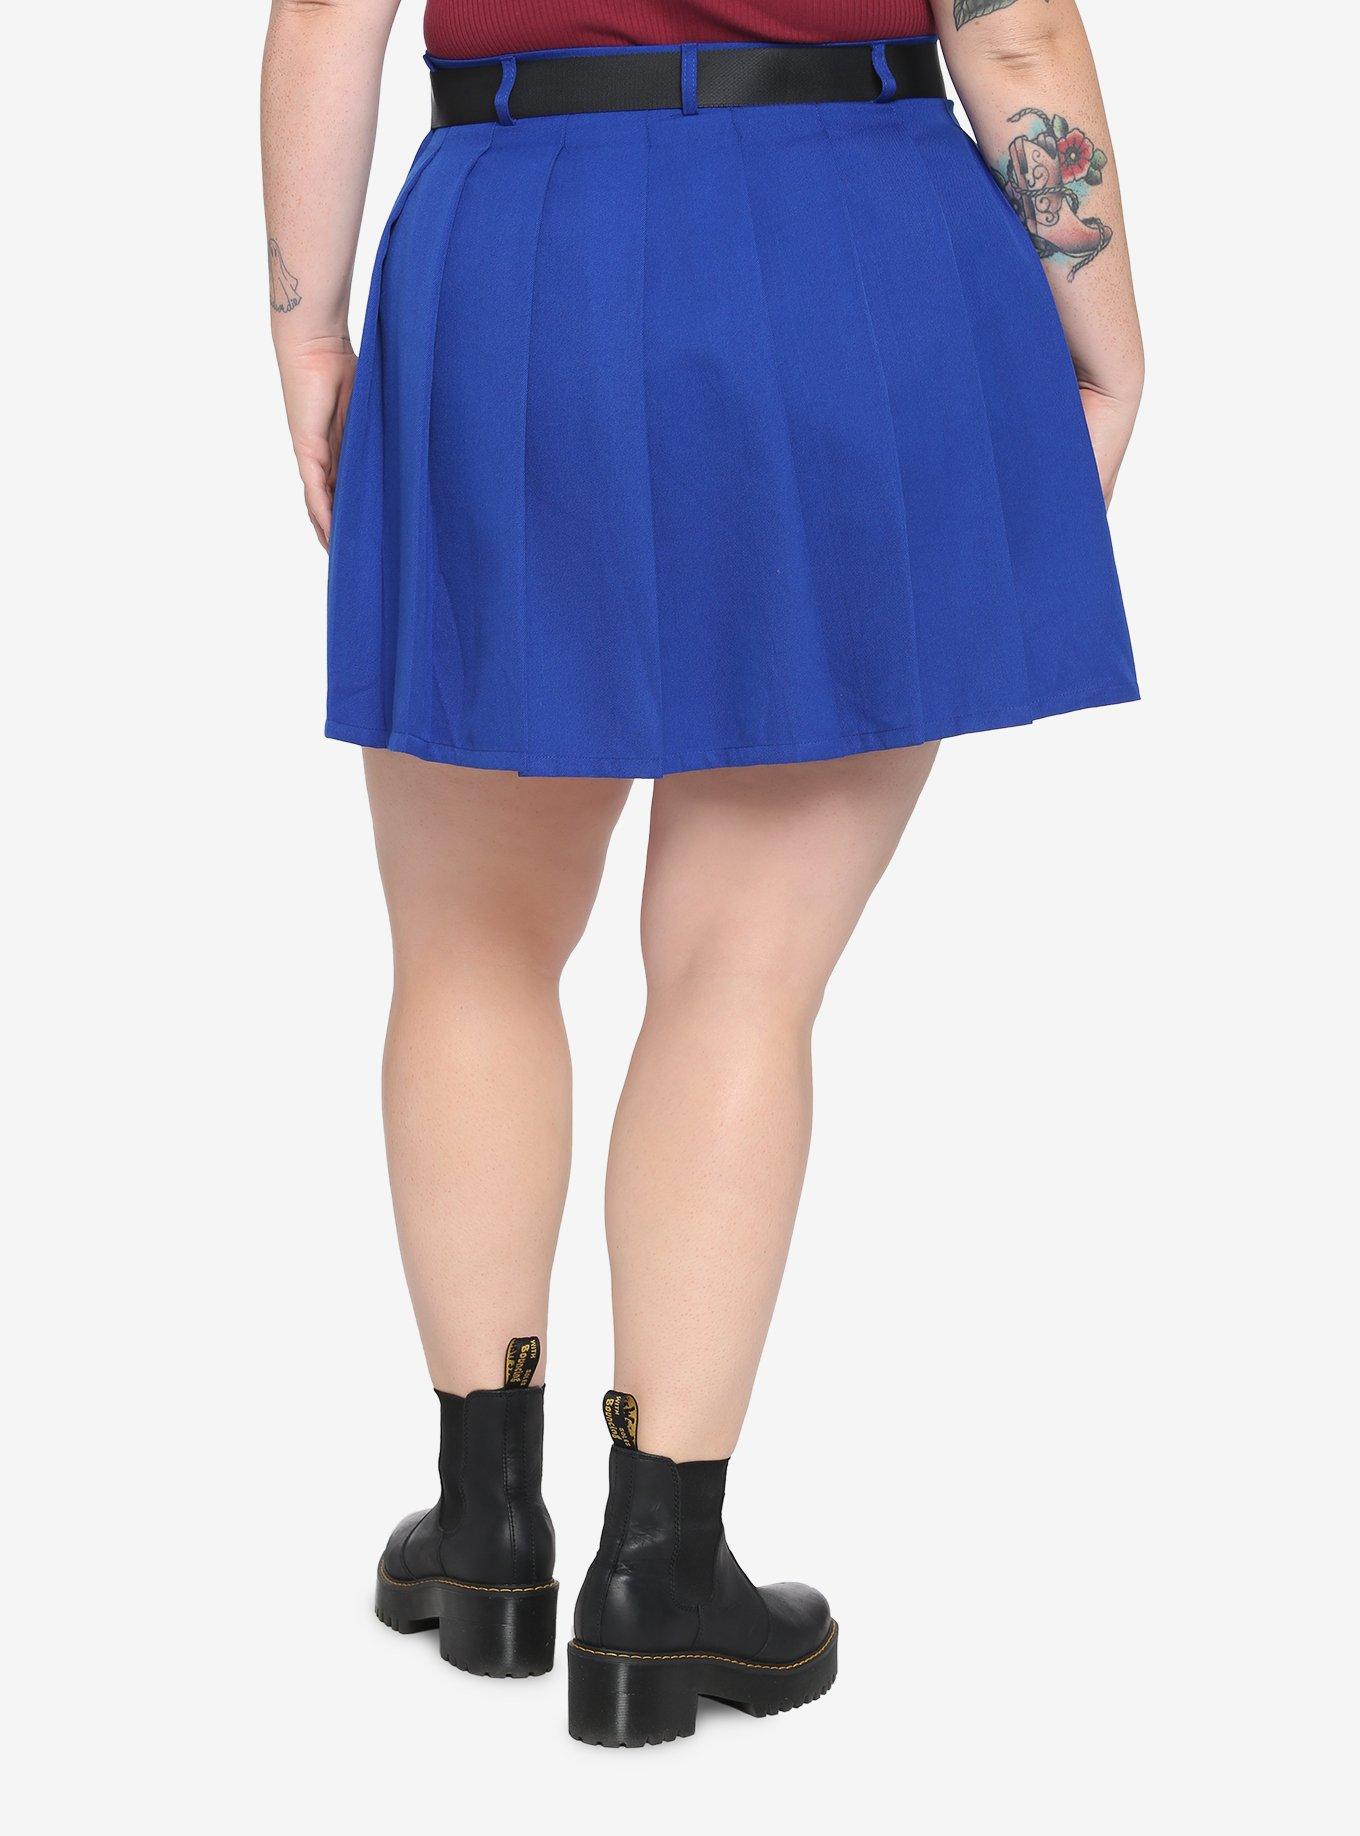 Blue & Black Buckle Belt Skirt Plus Size, BLUE, alternate